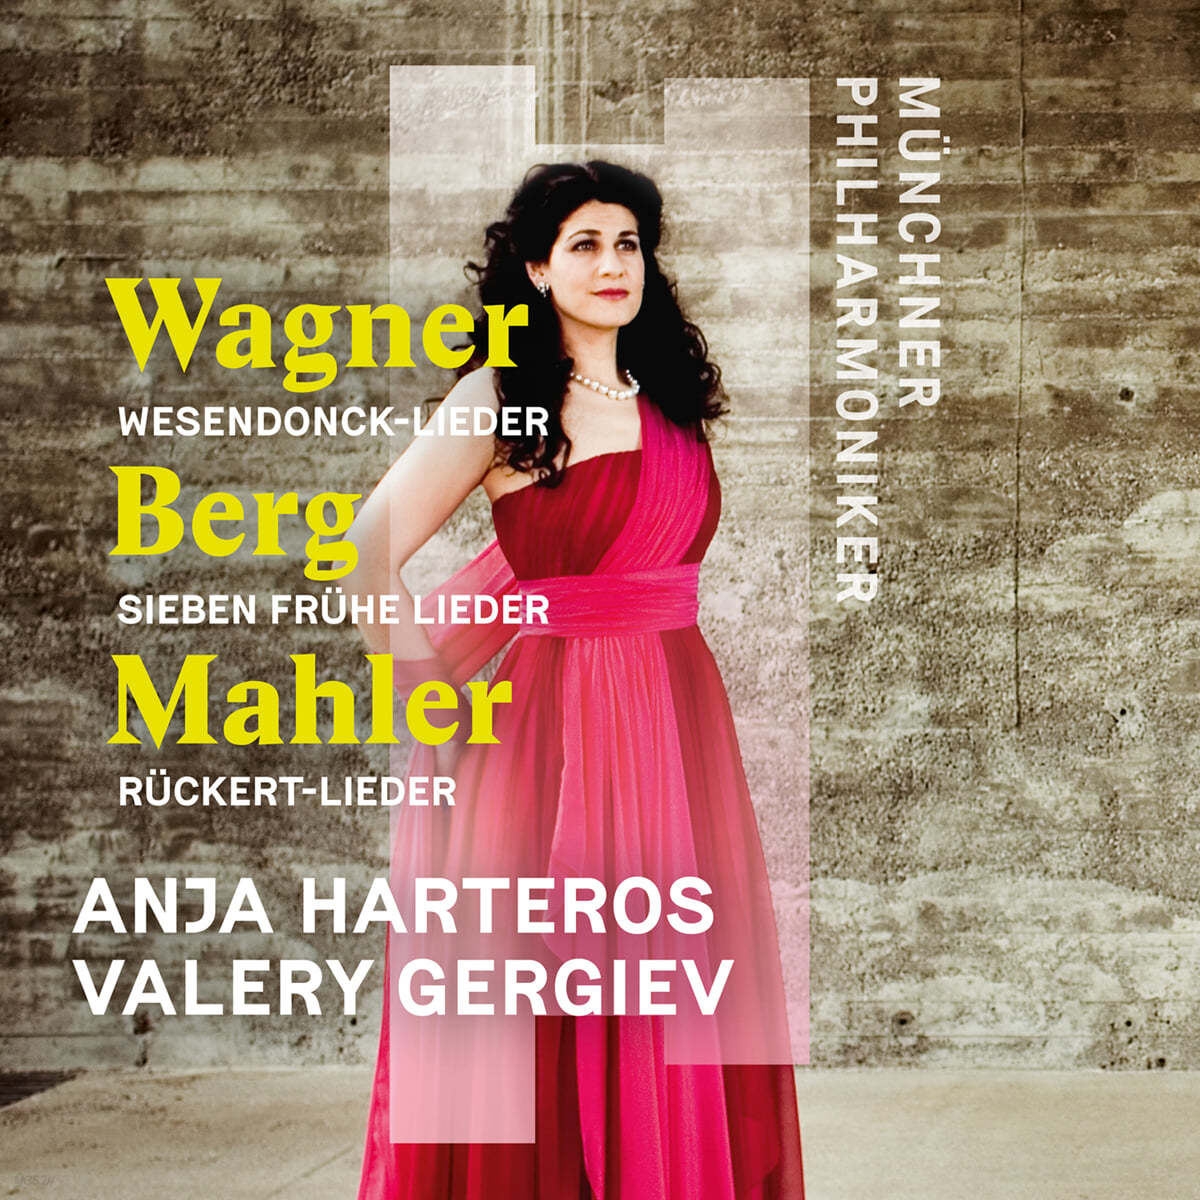 Anja Harteros 바그너 / 말러 / 베르크: 가곡 (Wagner / Mahler / Berg: Lieder) 